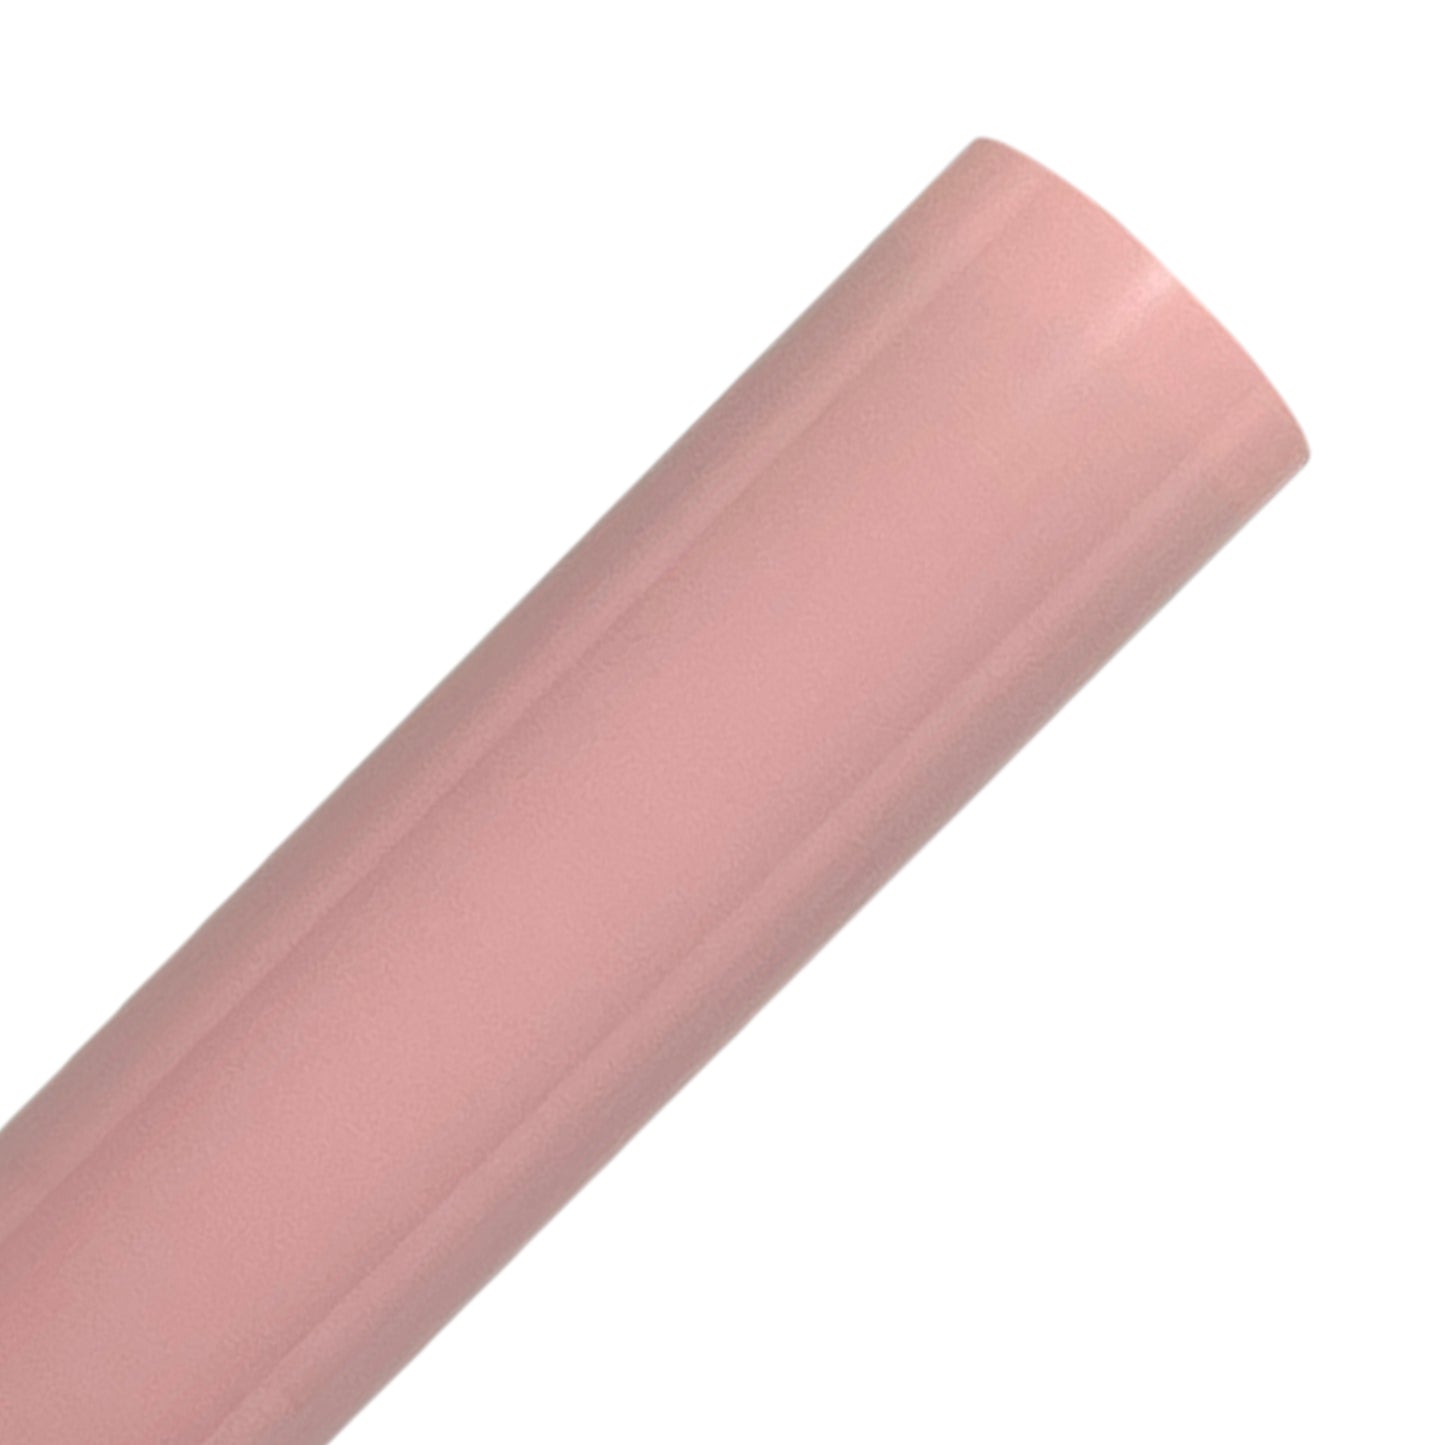 Pink Heat Transfer Vinyl Rolls By Craftables